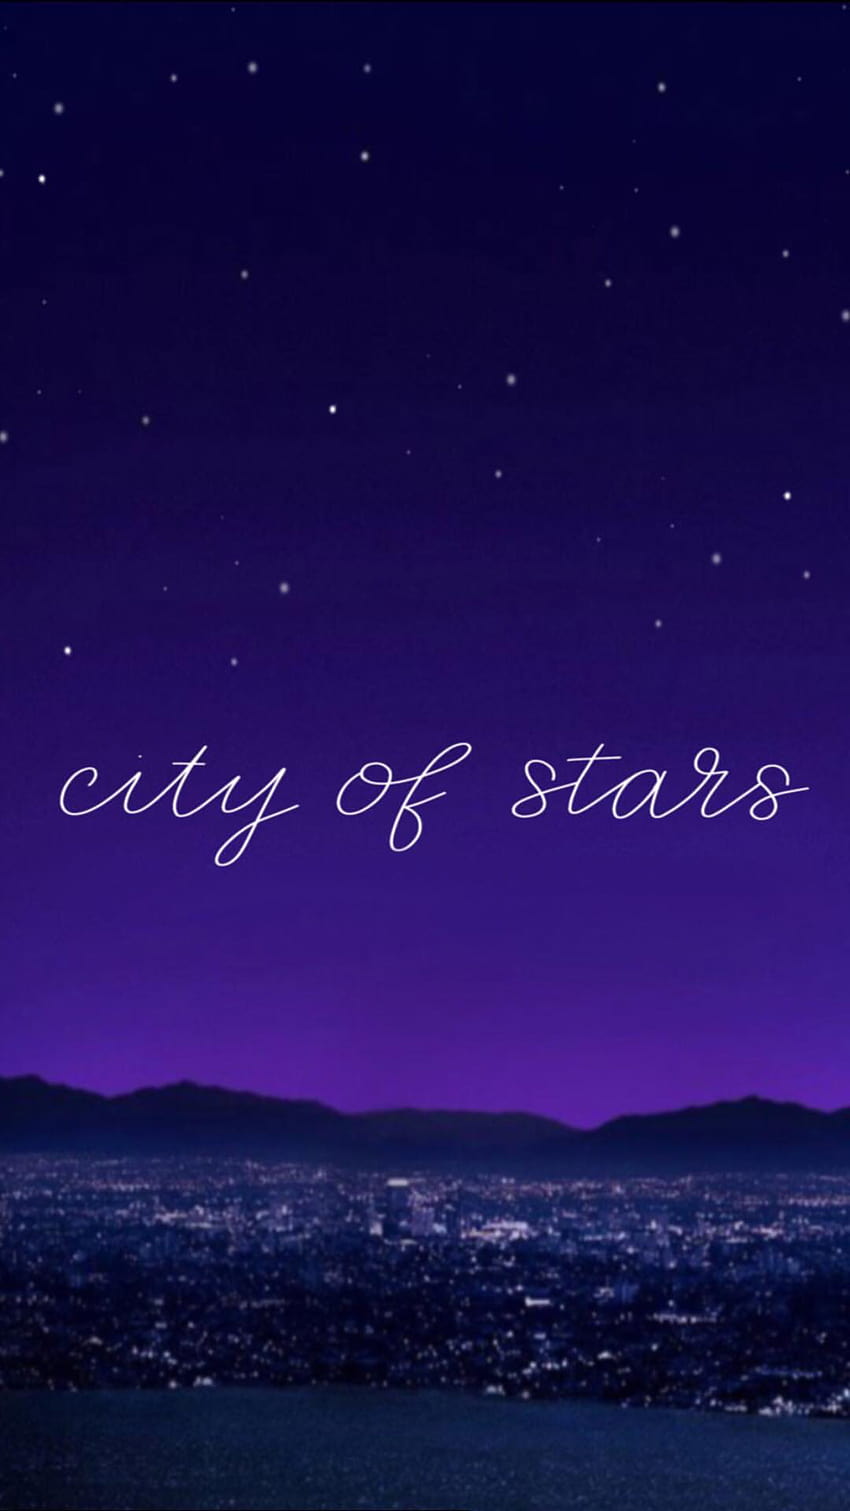 14 City of stara ideas, city of stars HD phone wallpaper